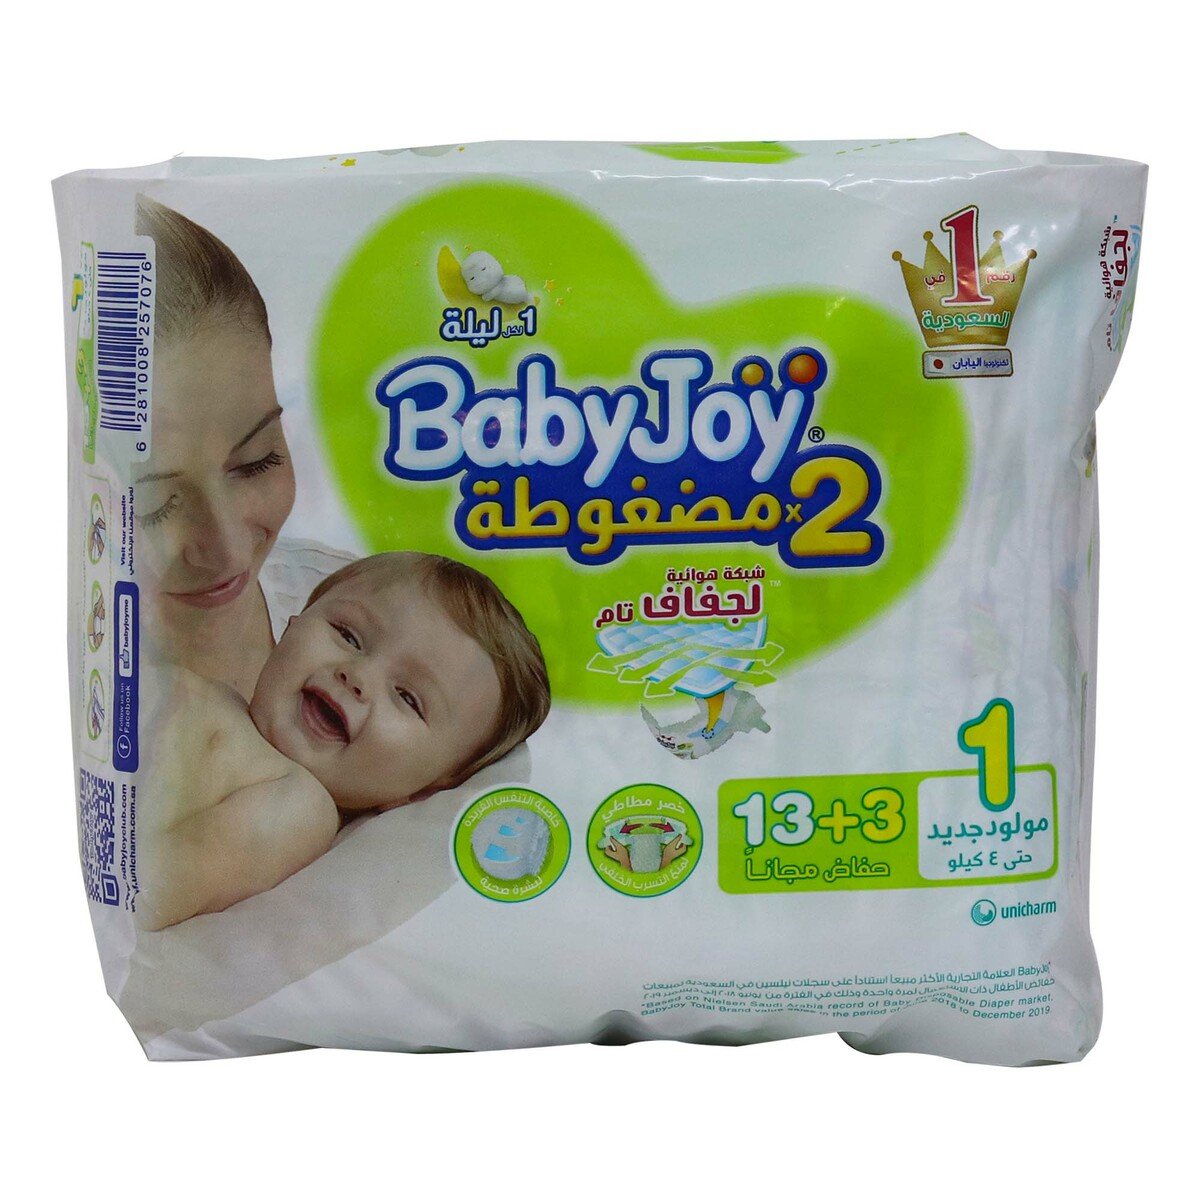 Baby Joy Baby Diaper Newborn 13+3